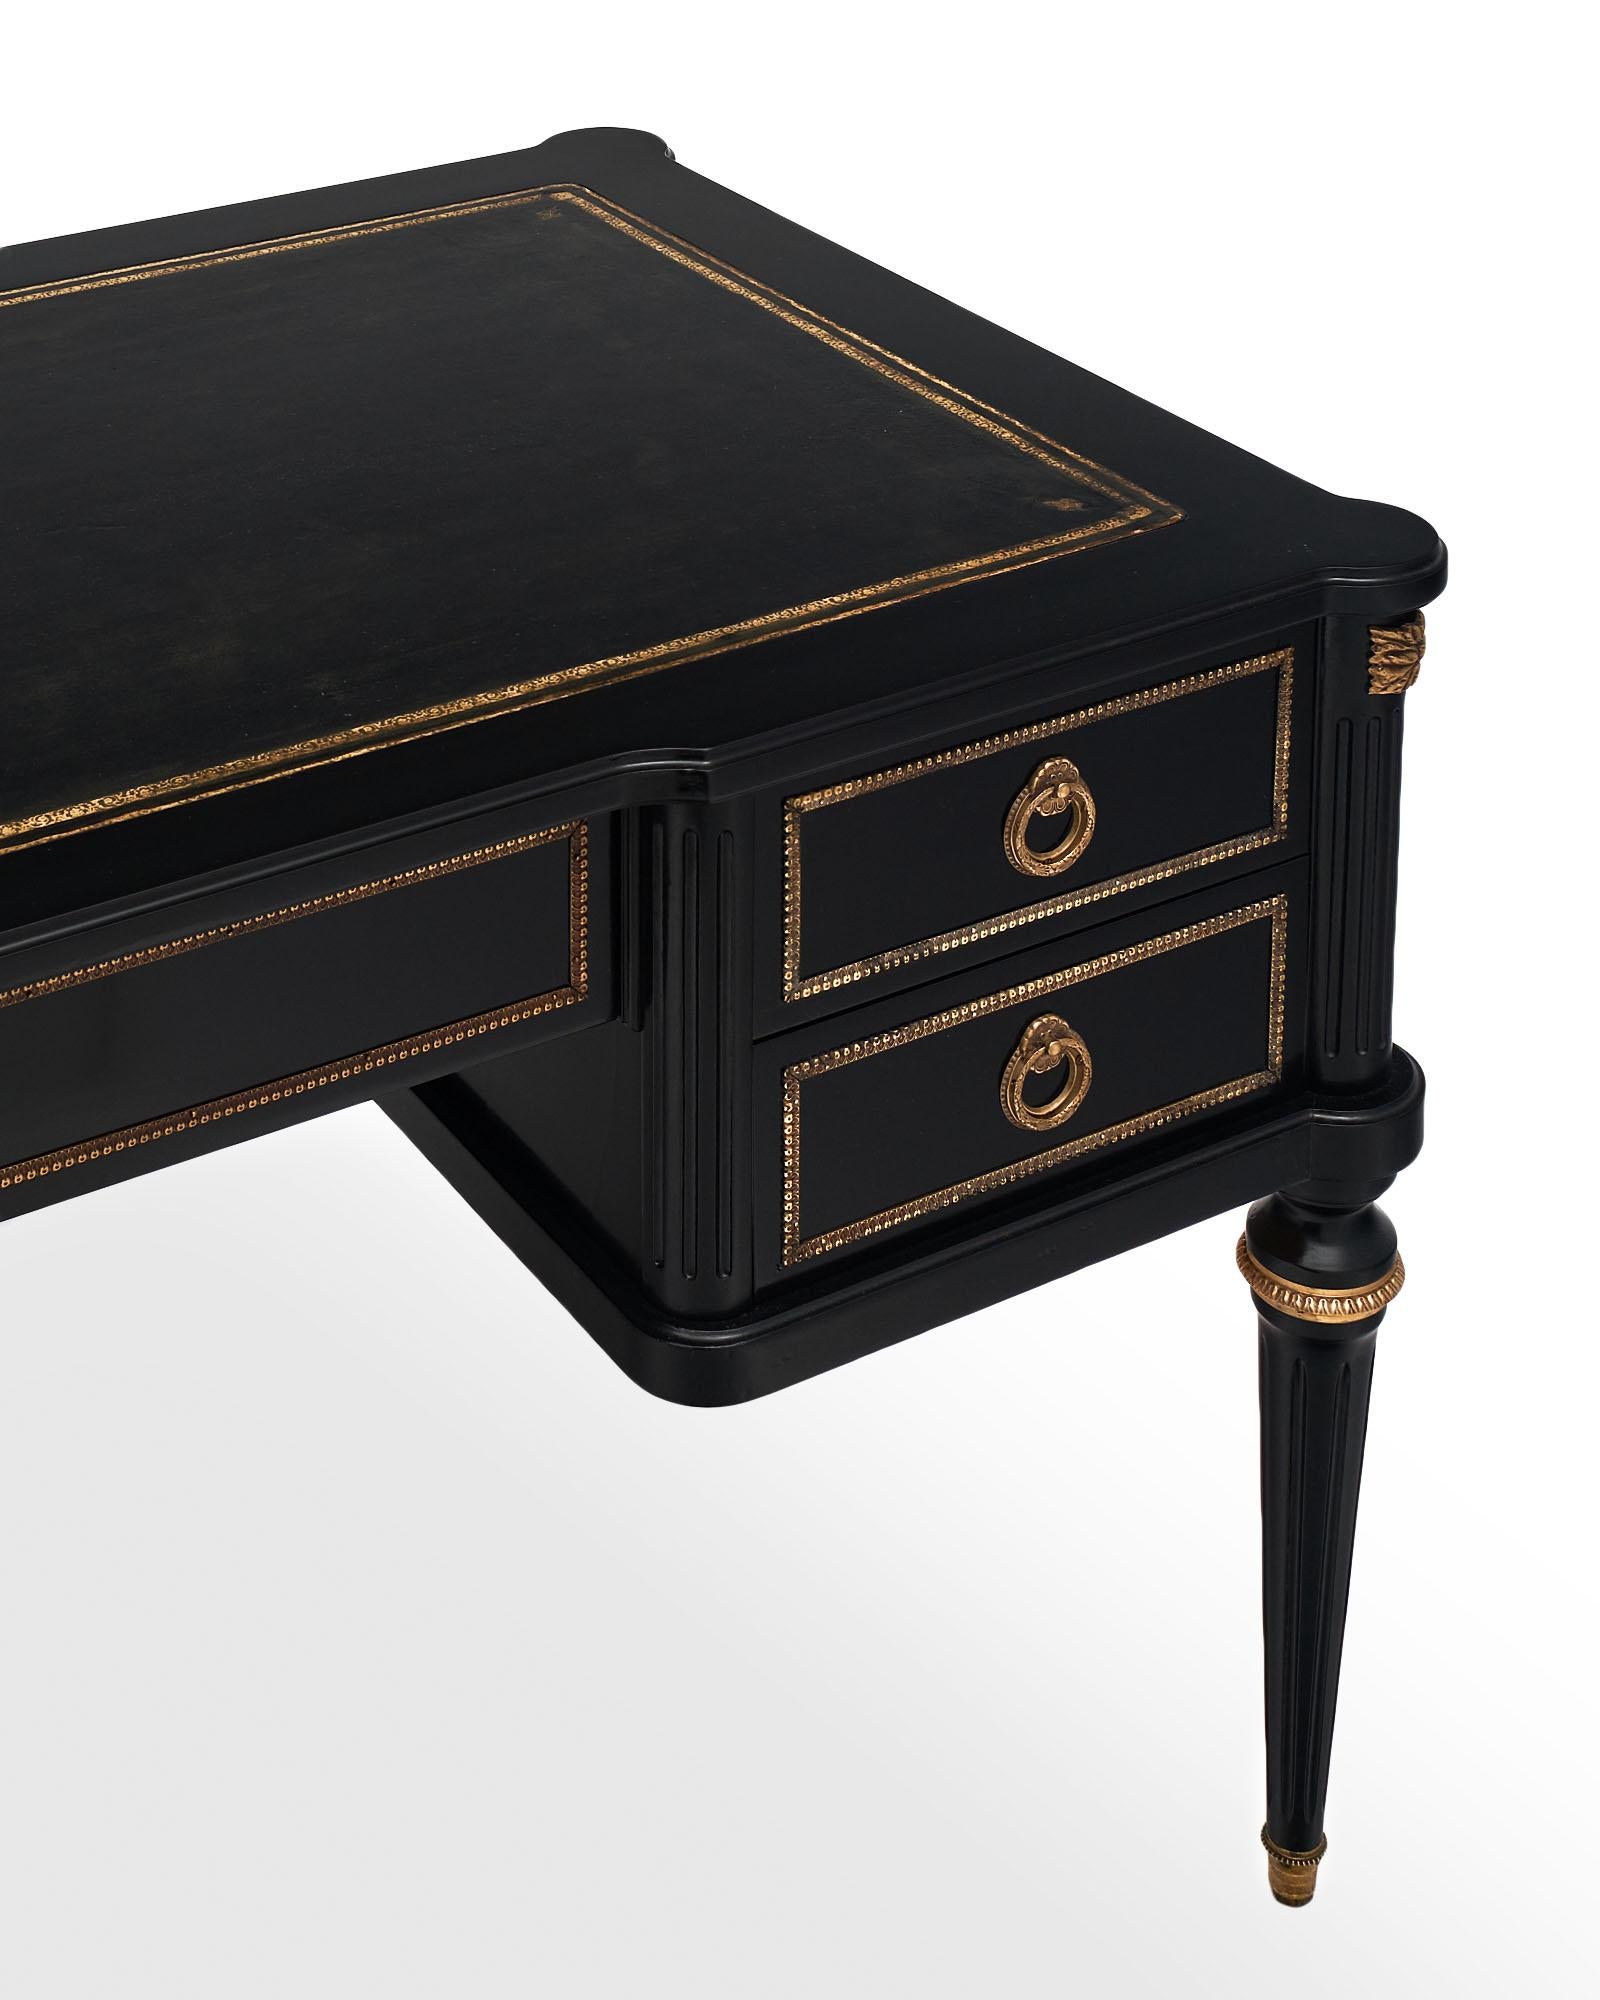 French Louis XVI Style Ebonized Desk